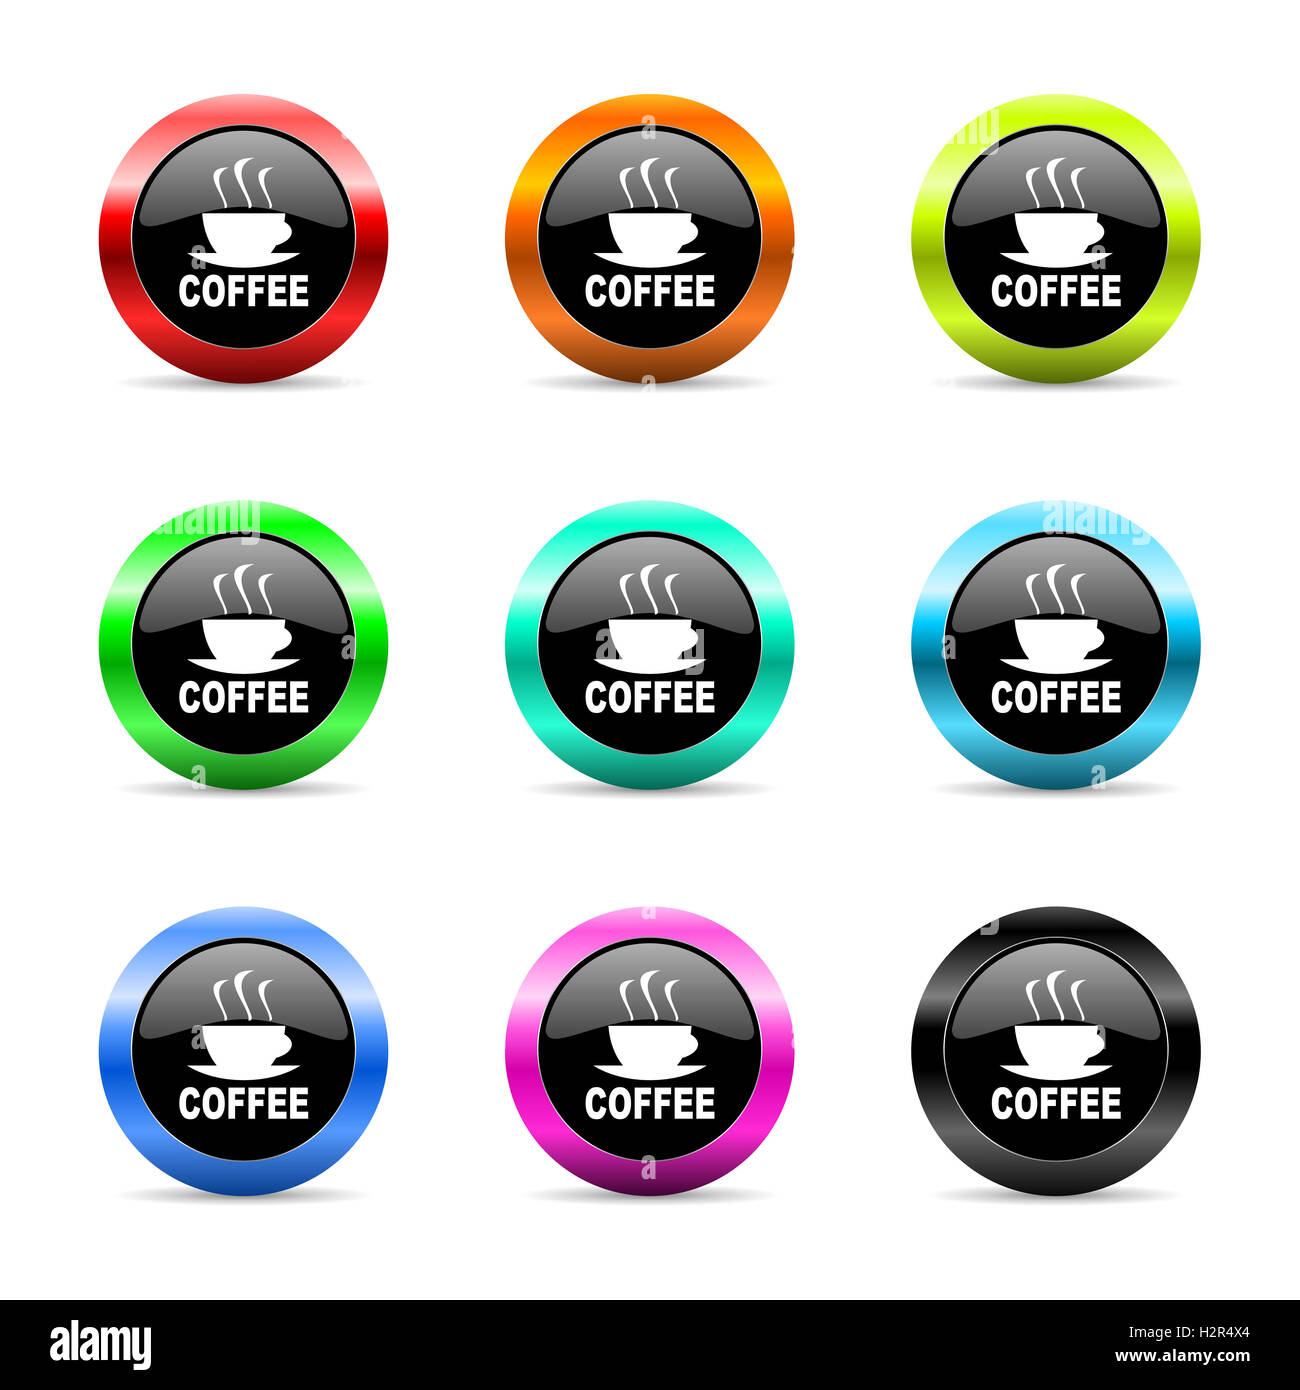 espresso web icons set Stock Photo